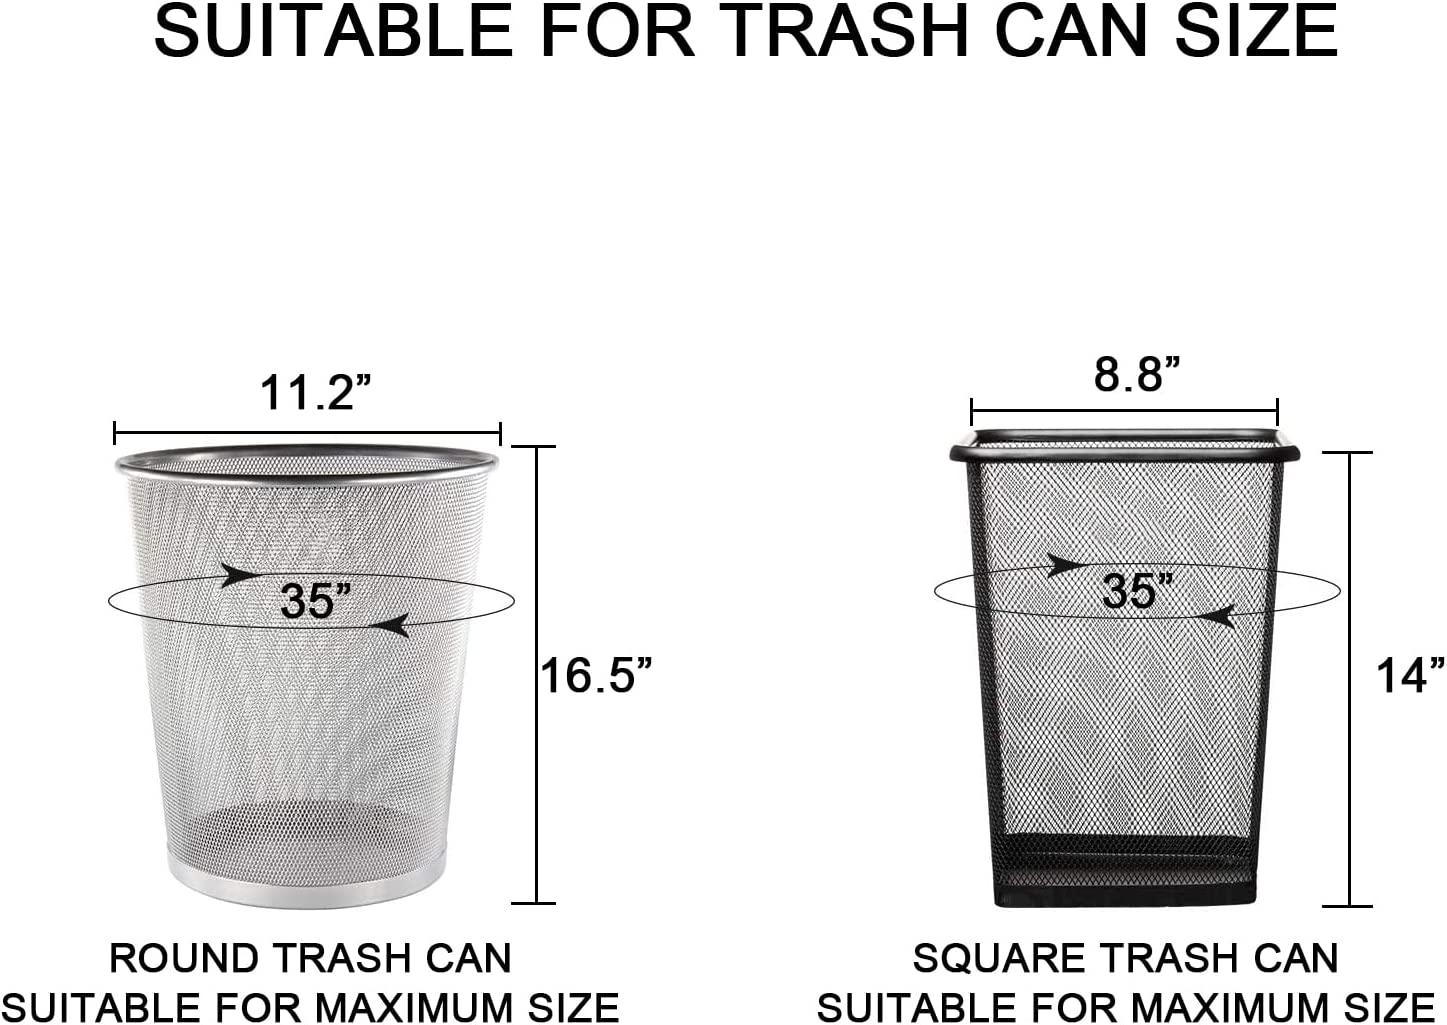 3 Gallon Small Clear Bathroom Trash Bags, Office Wastebasket